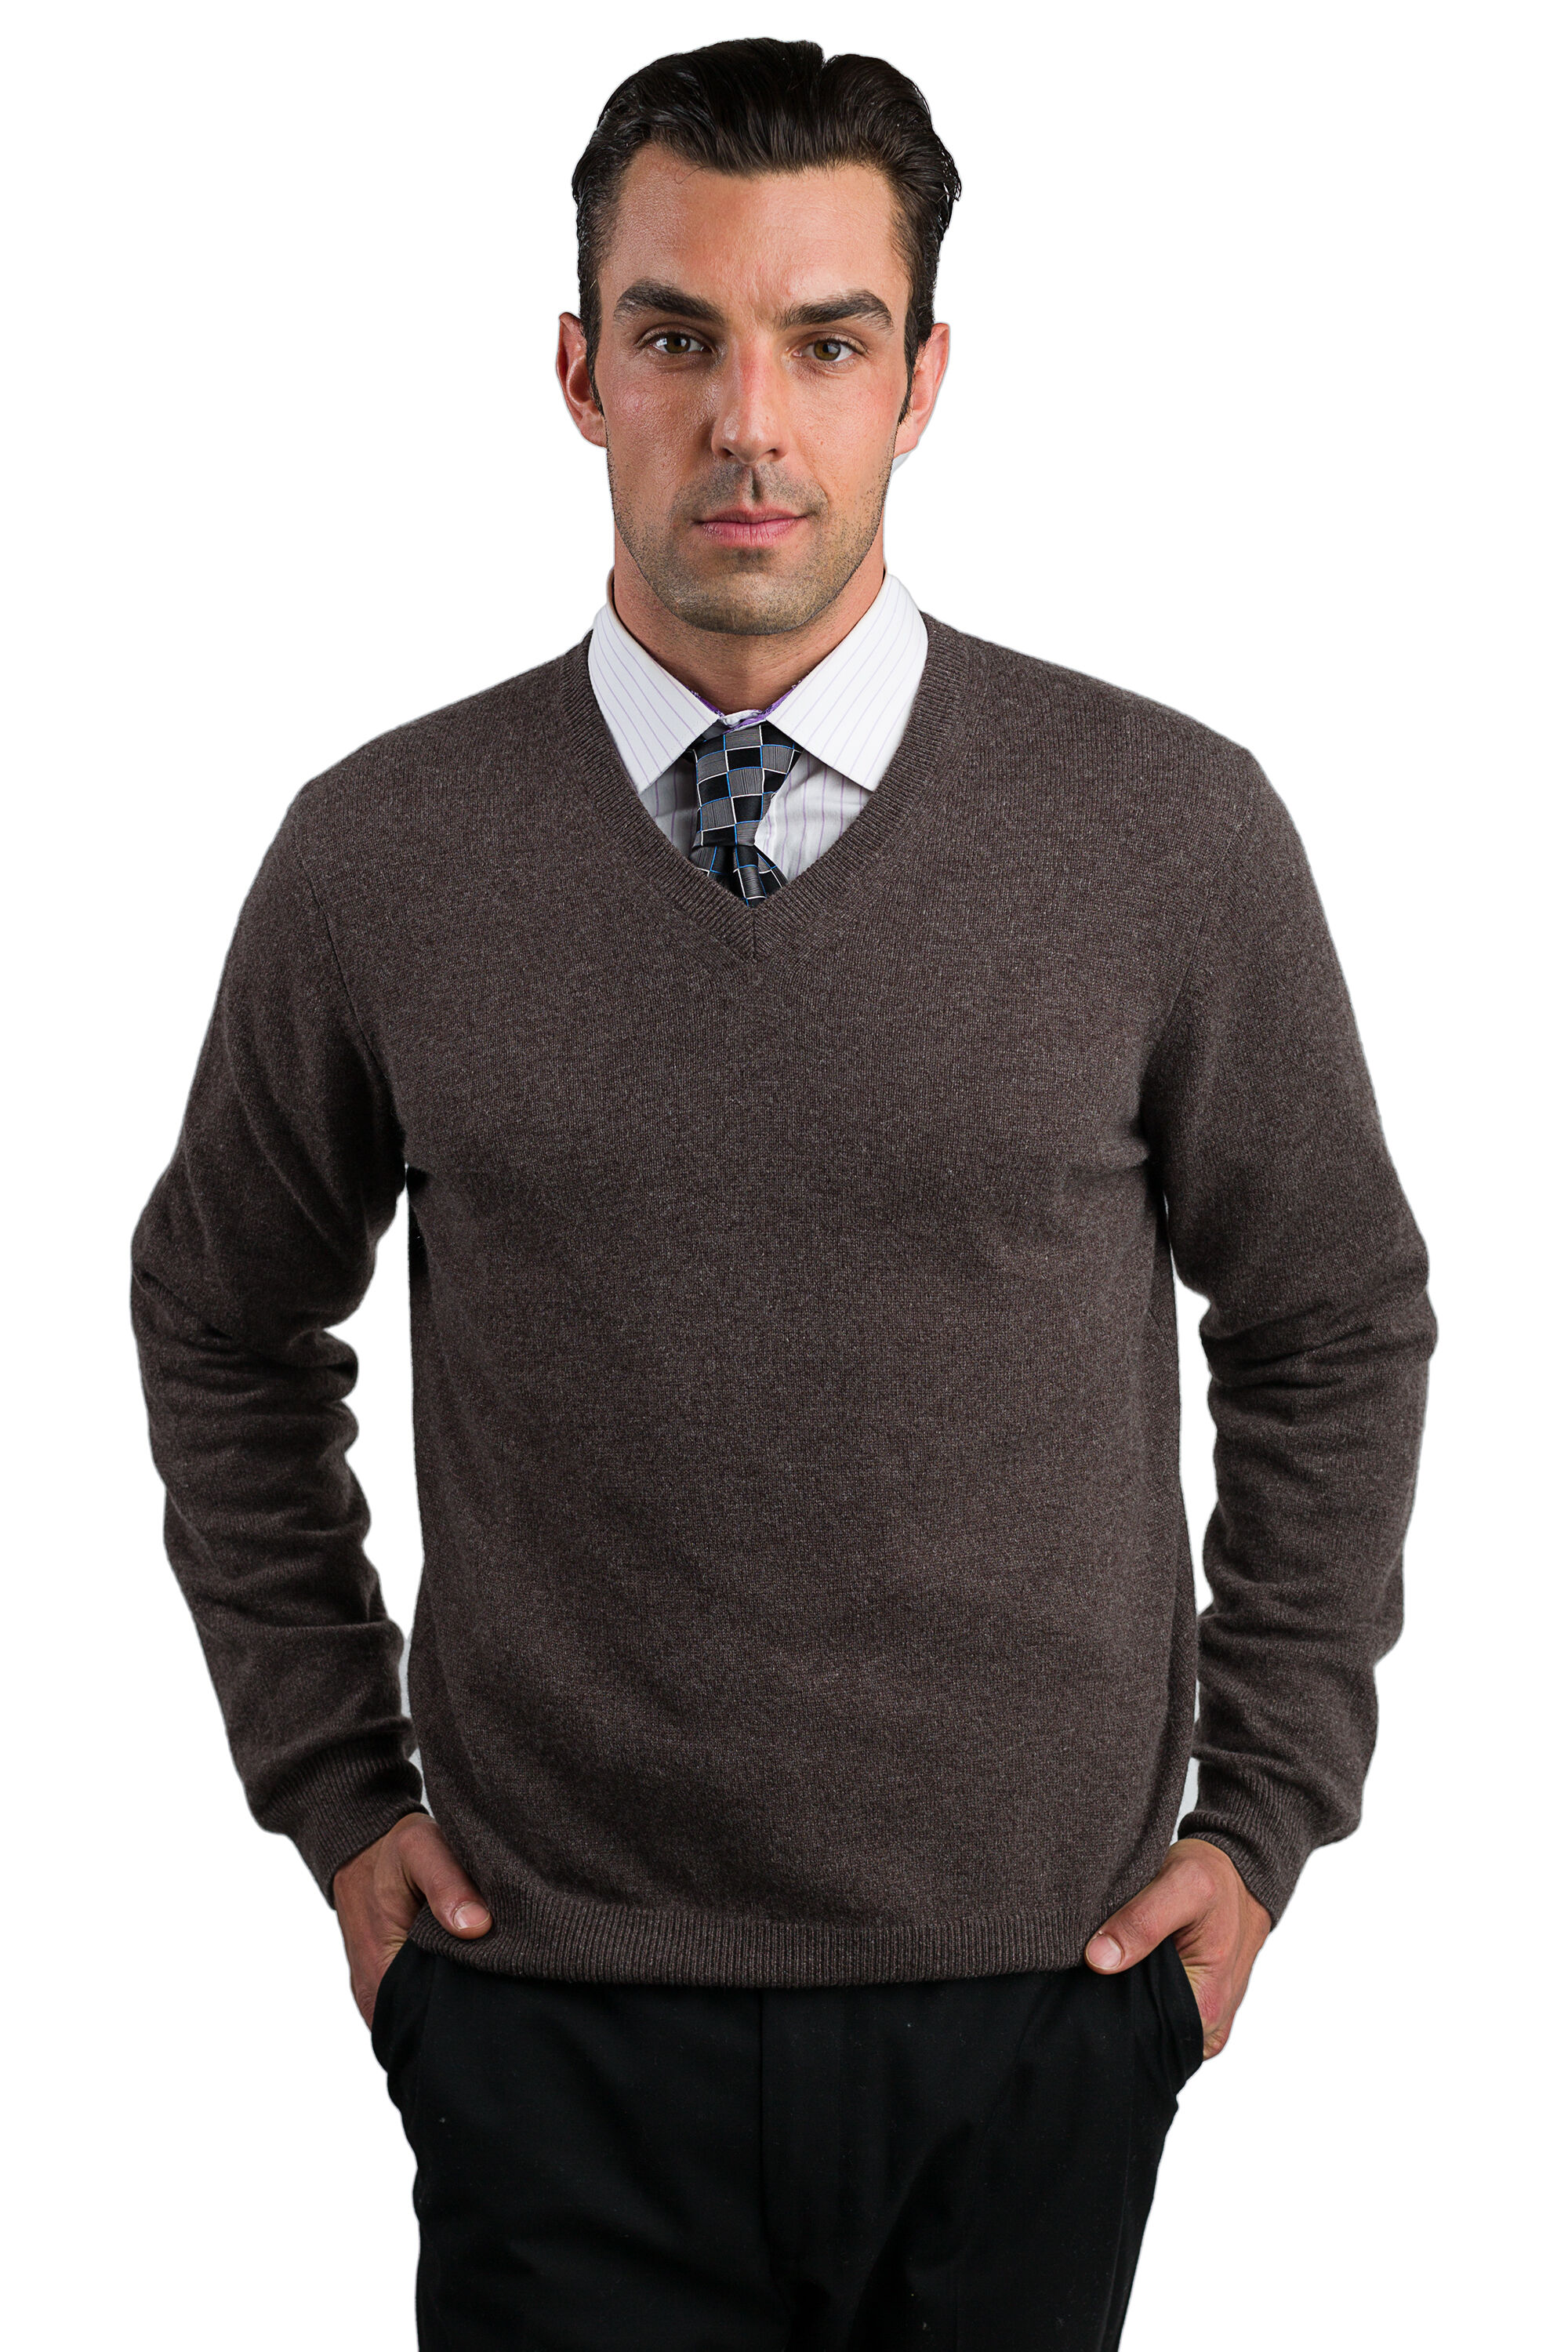 Net zo Stralend Glans Brown Men's 100% Cashmere Long Sleeve Pullover V Neck Sweater - J CASHMERE